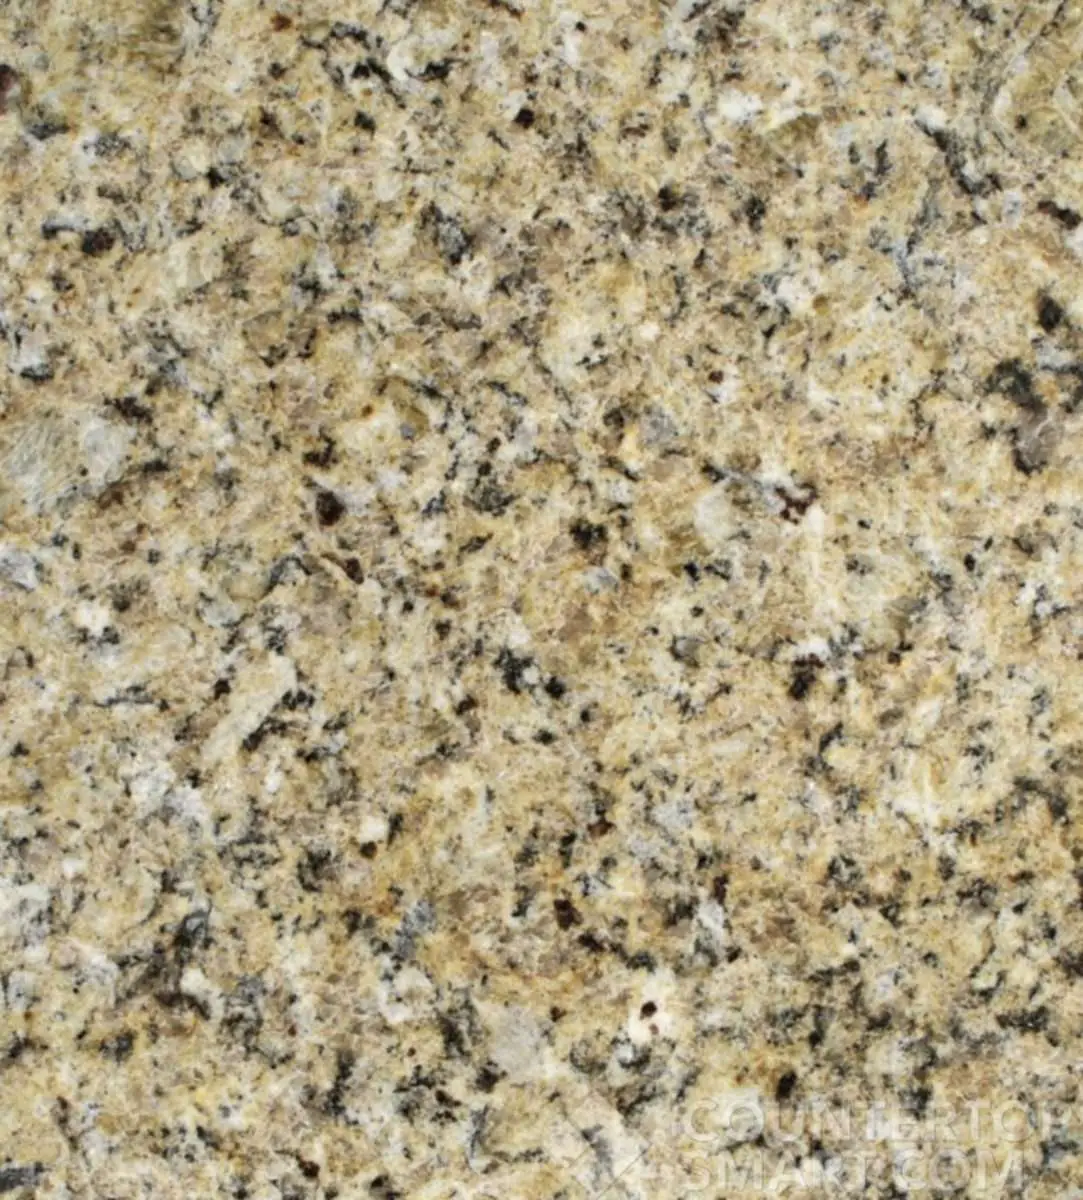 73% off your perfect Granite New Venetian Gold countertop ...